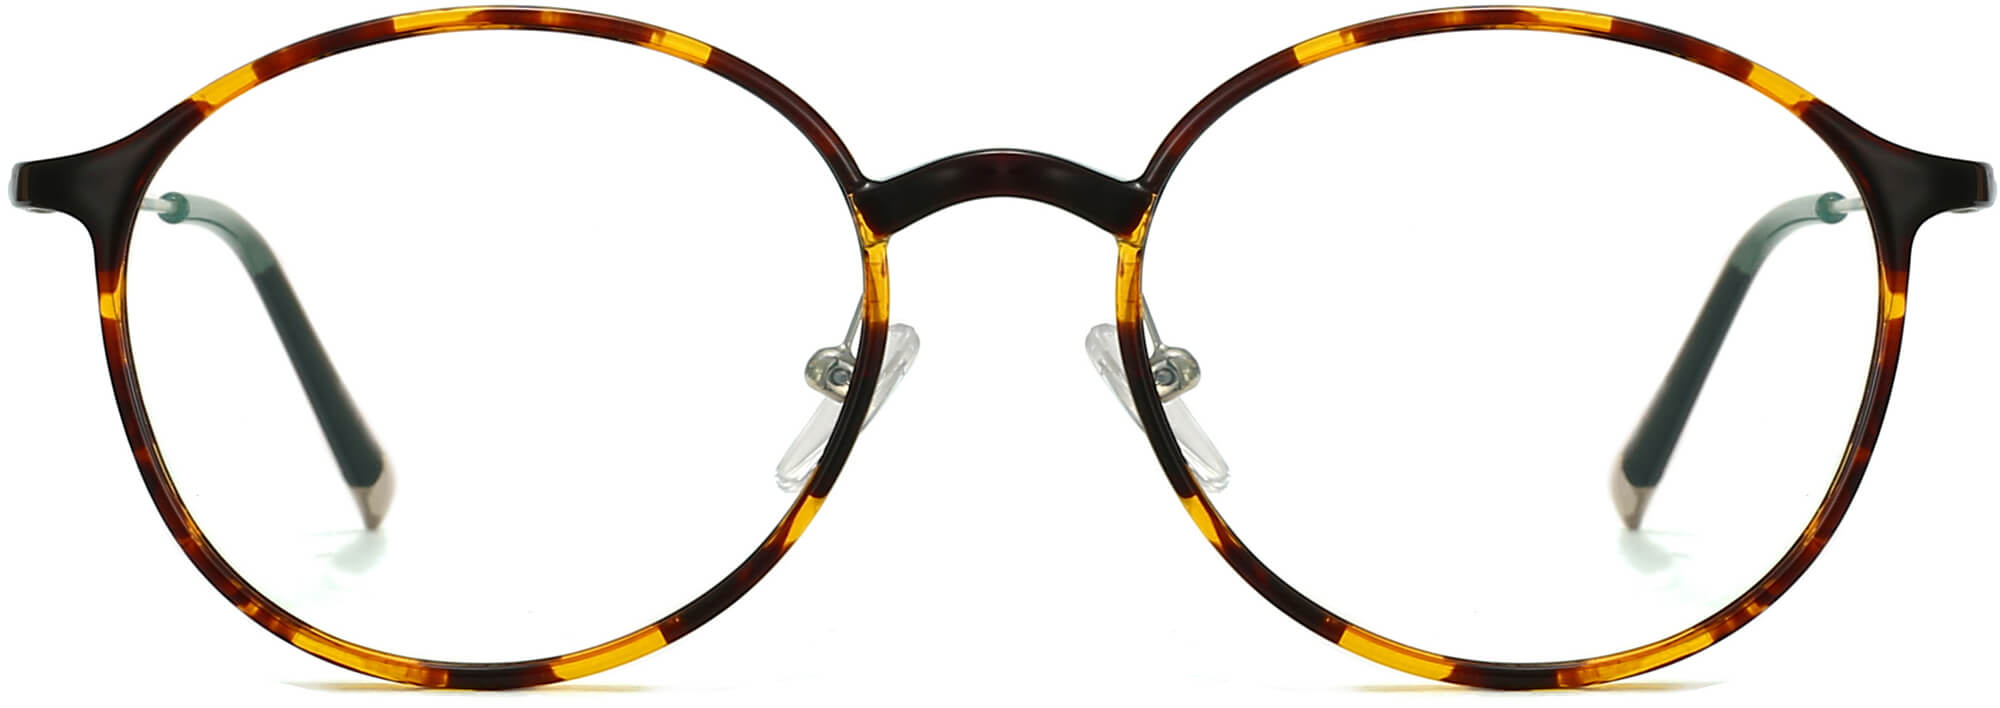 Trocina round tortoise Eyeglasses from ANRRI, front view